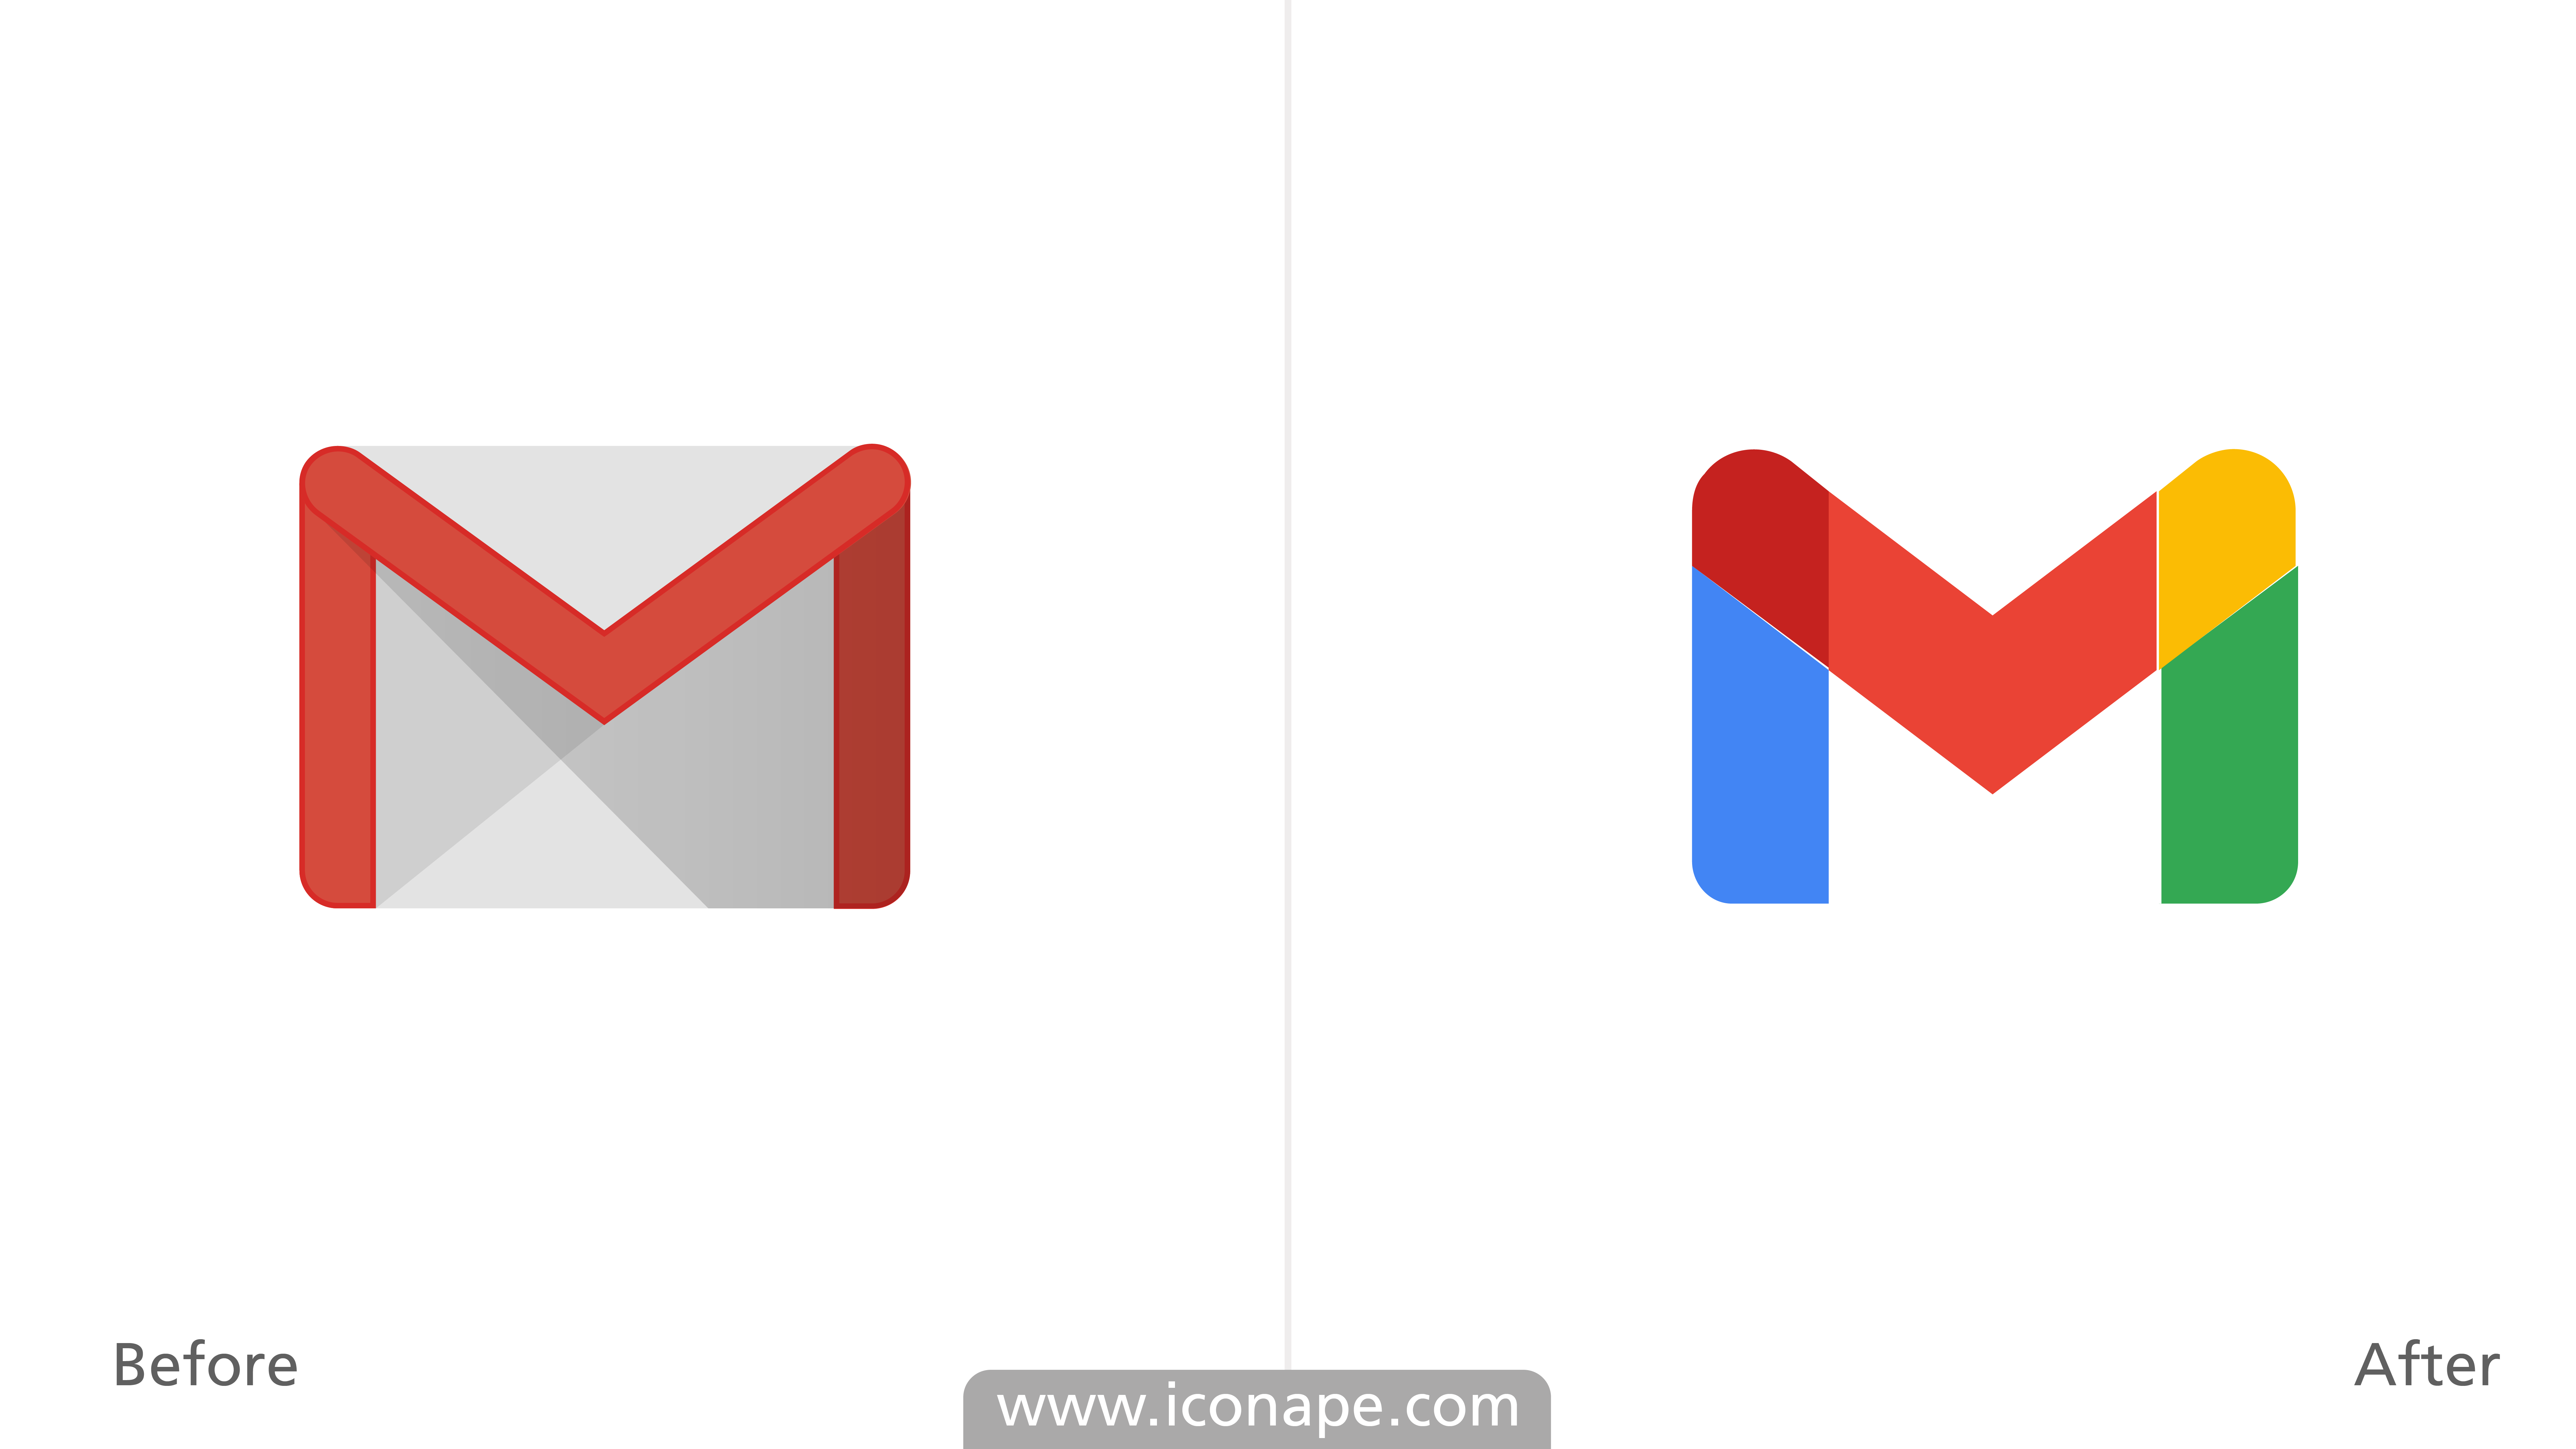 linkedin logo png for gmail